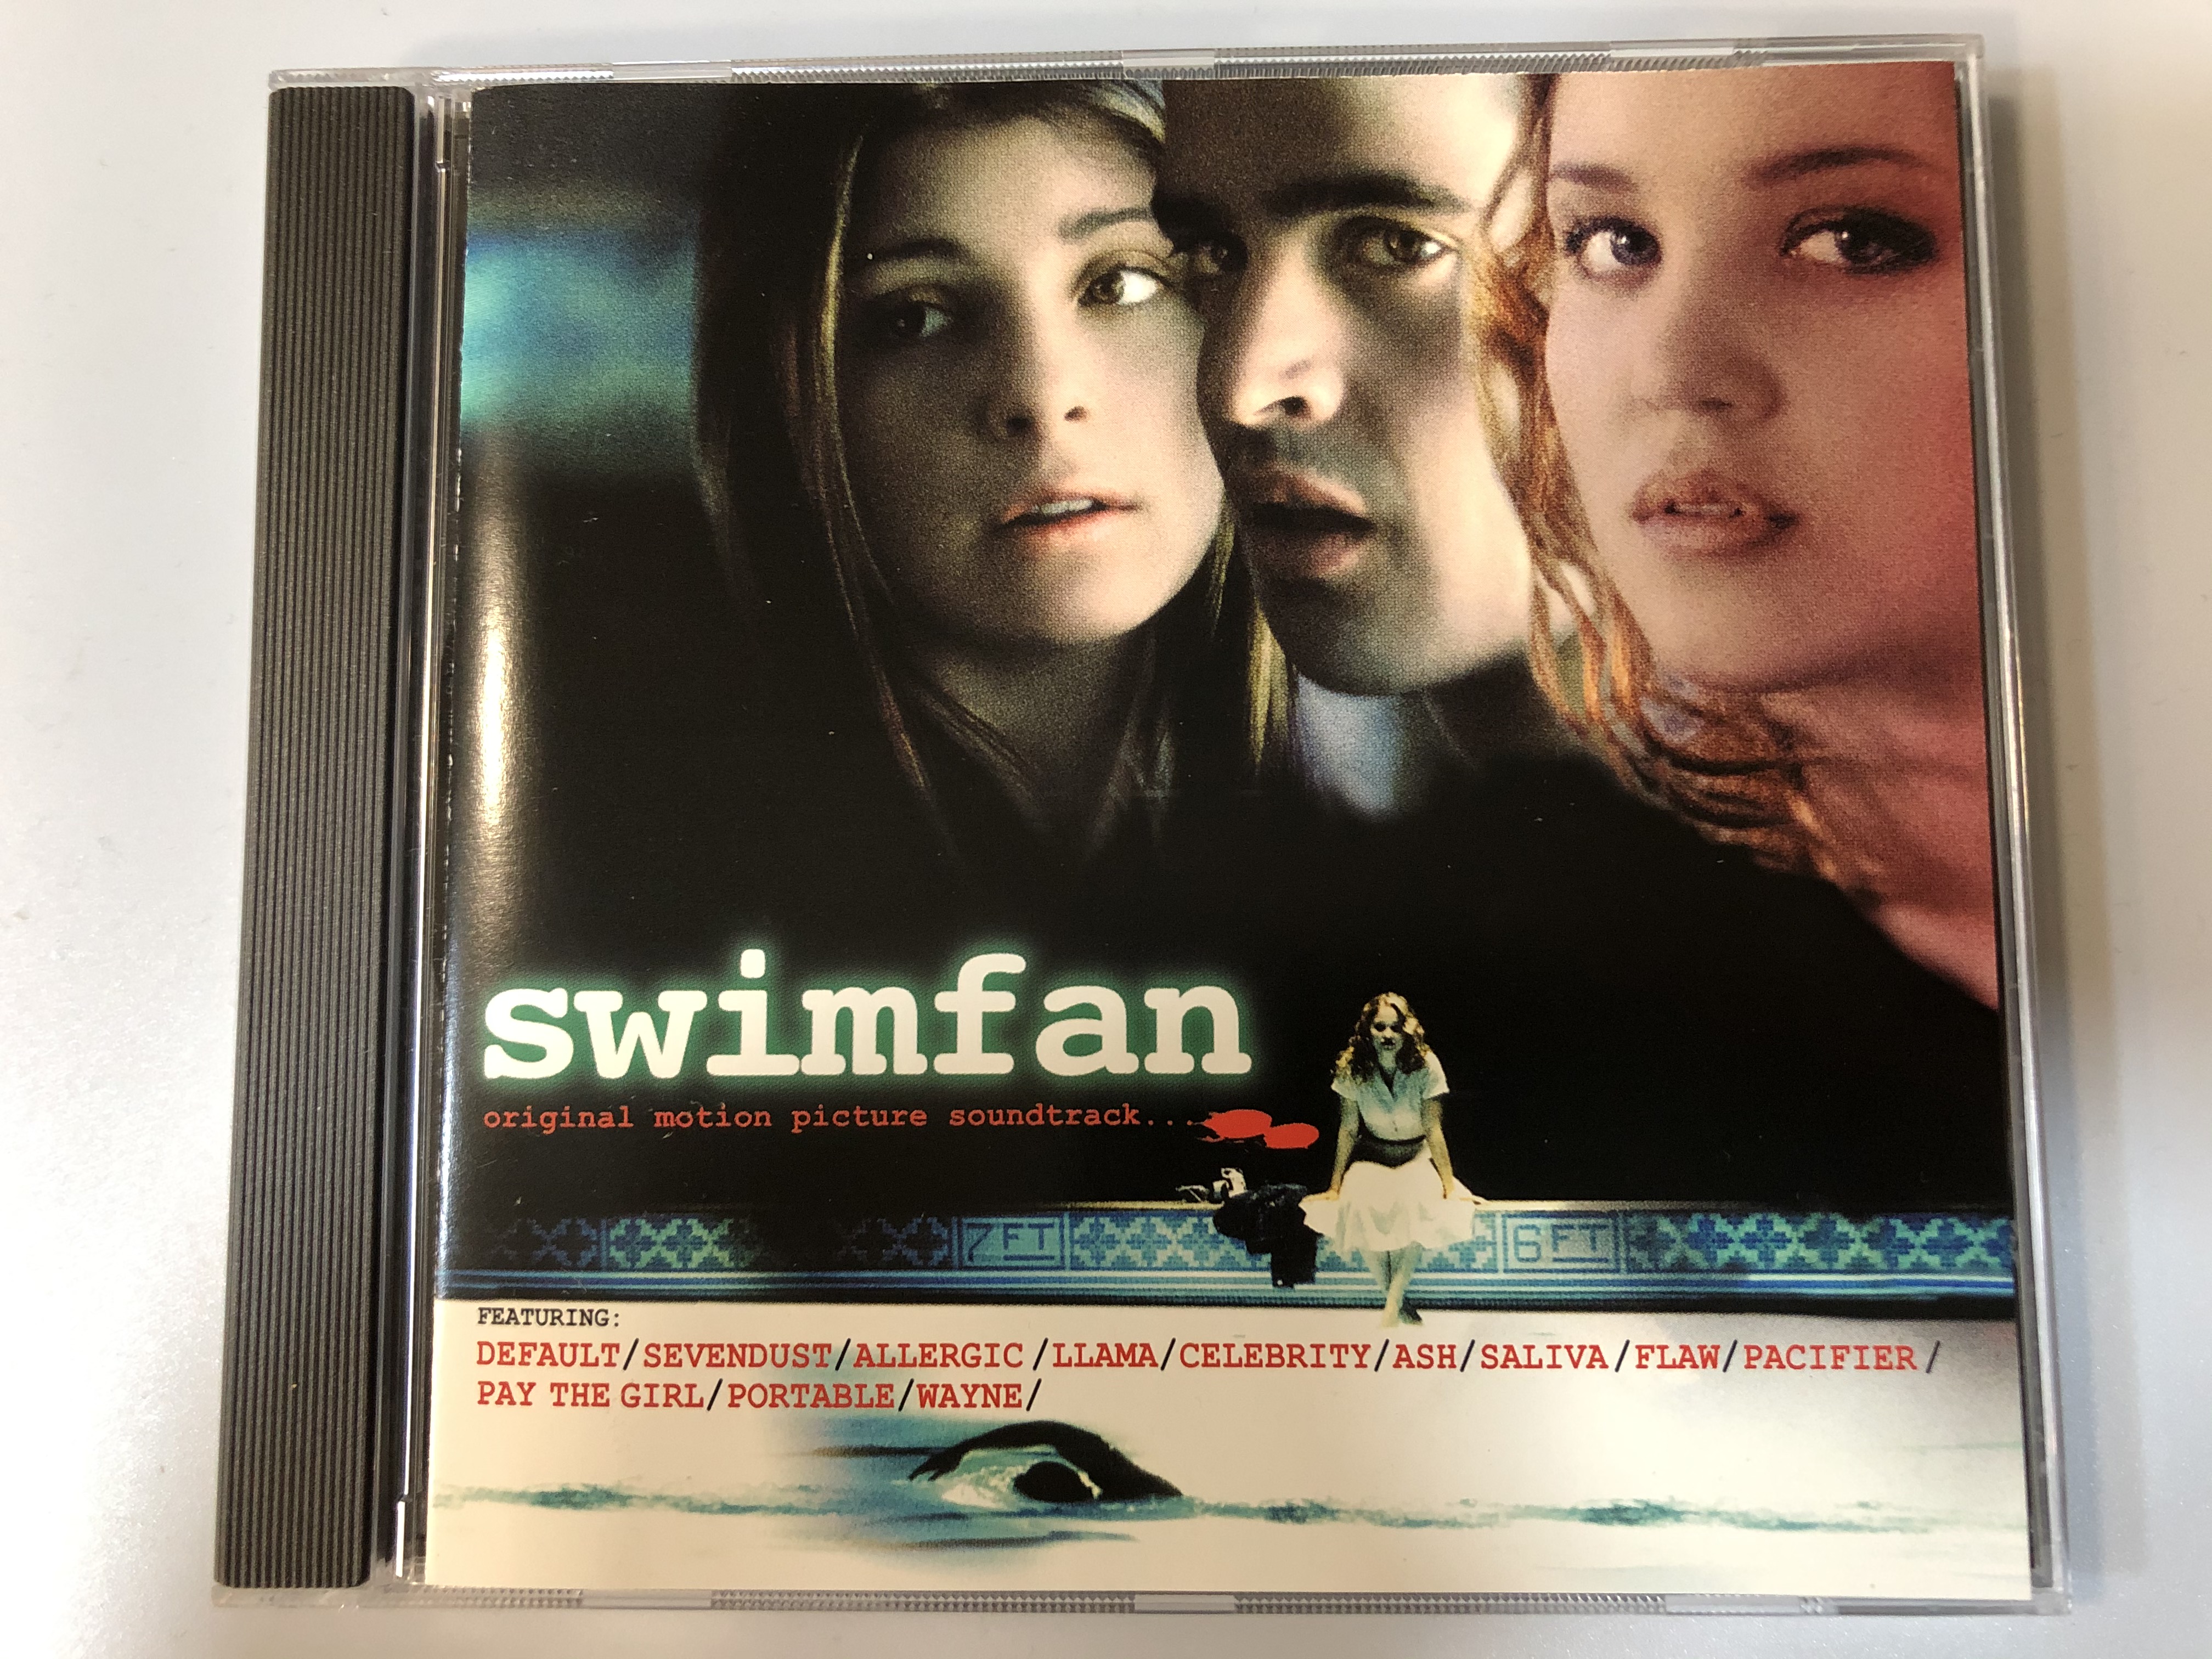 swimfan-original-motion-picture-soundtrack-featuring-default-sevendust-allergic-llama-celebrity-ash-saliva-flaw-pacifier-pay-the-girl-portable-wayne-island-records-audio-cd-200-1-.jpg